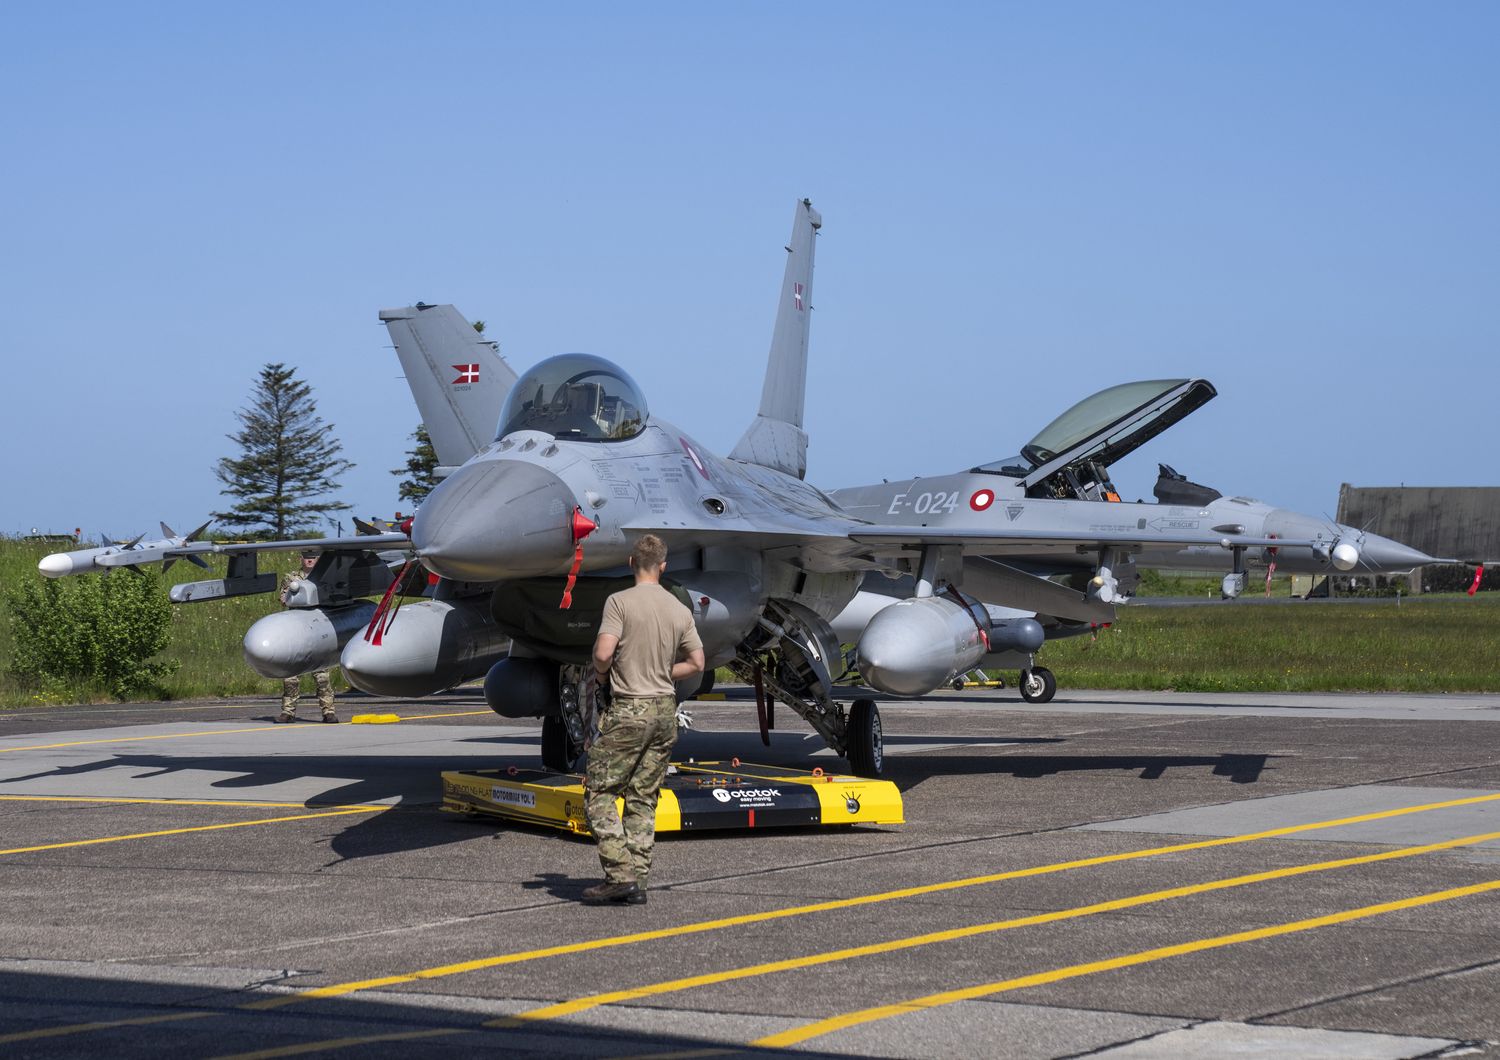 Aerei F-16 danesi